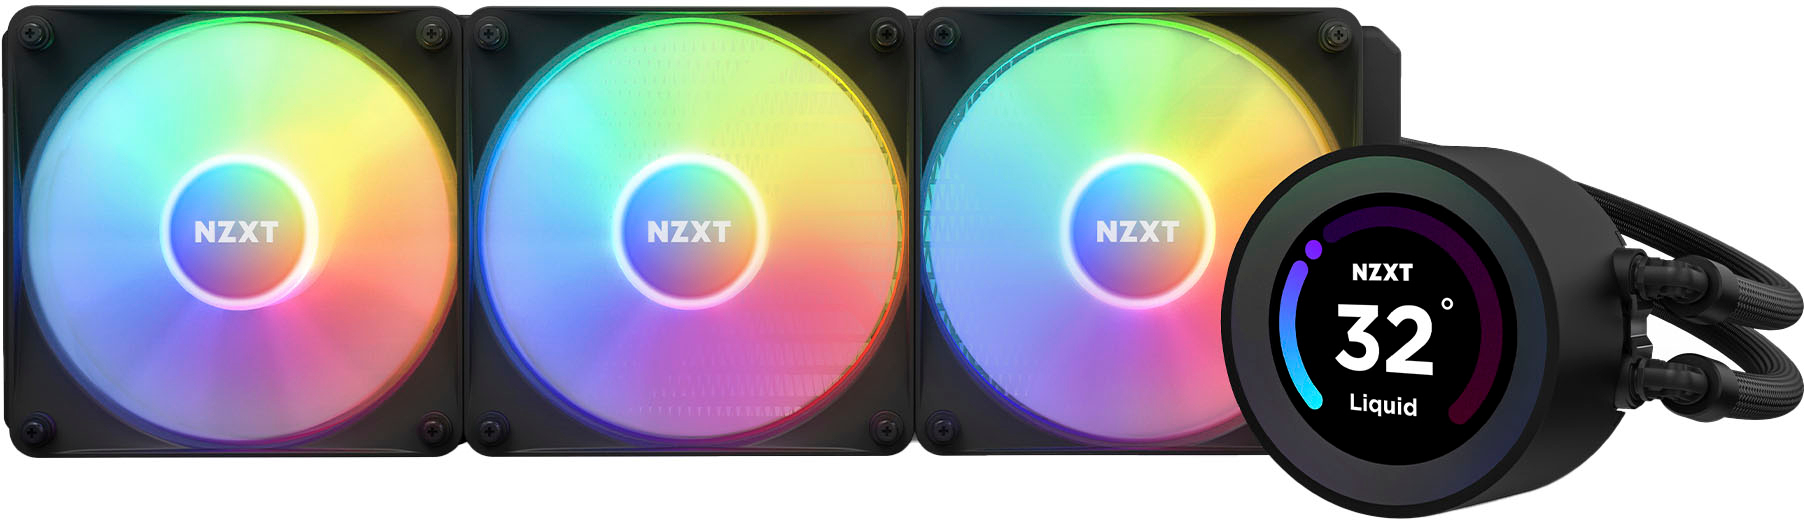 NZXT Kraken 360mm RGB CPU Liquid Cooler (with LCD Display) (Black